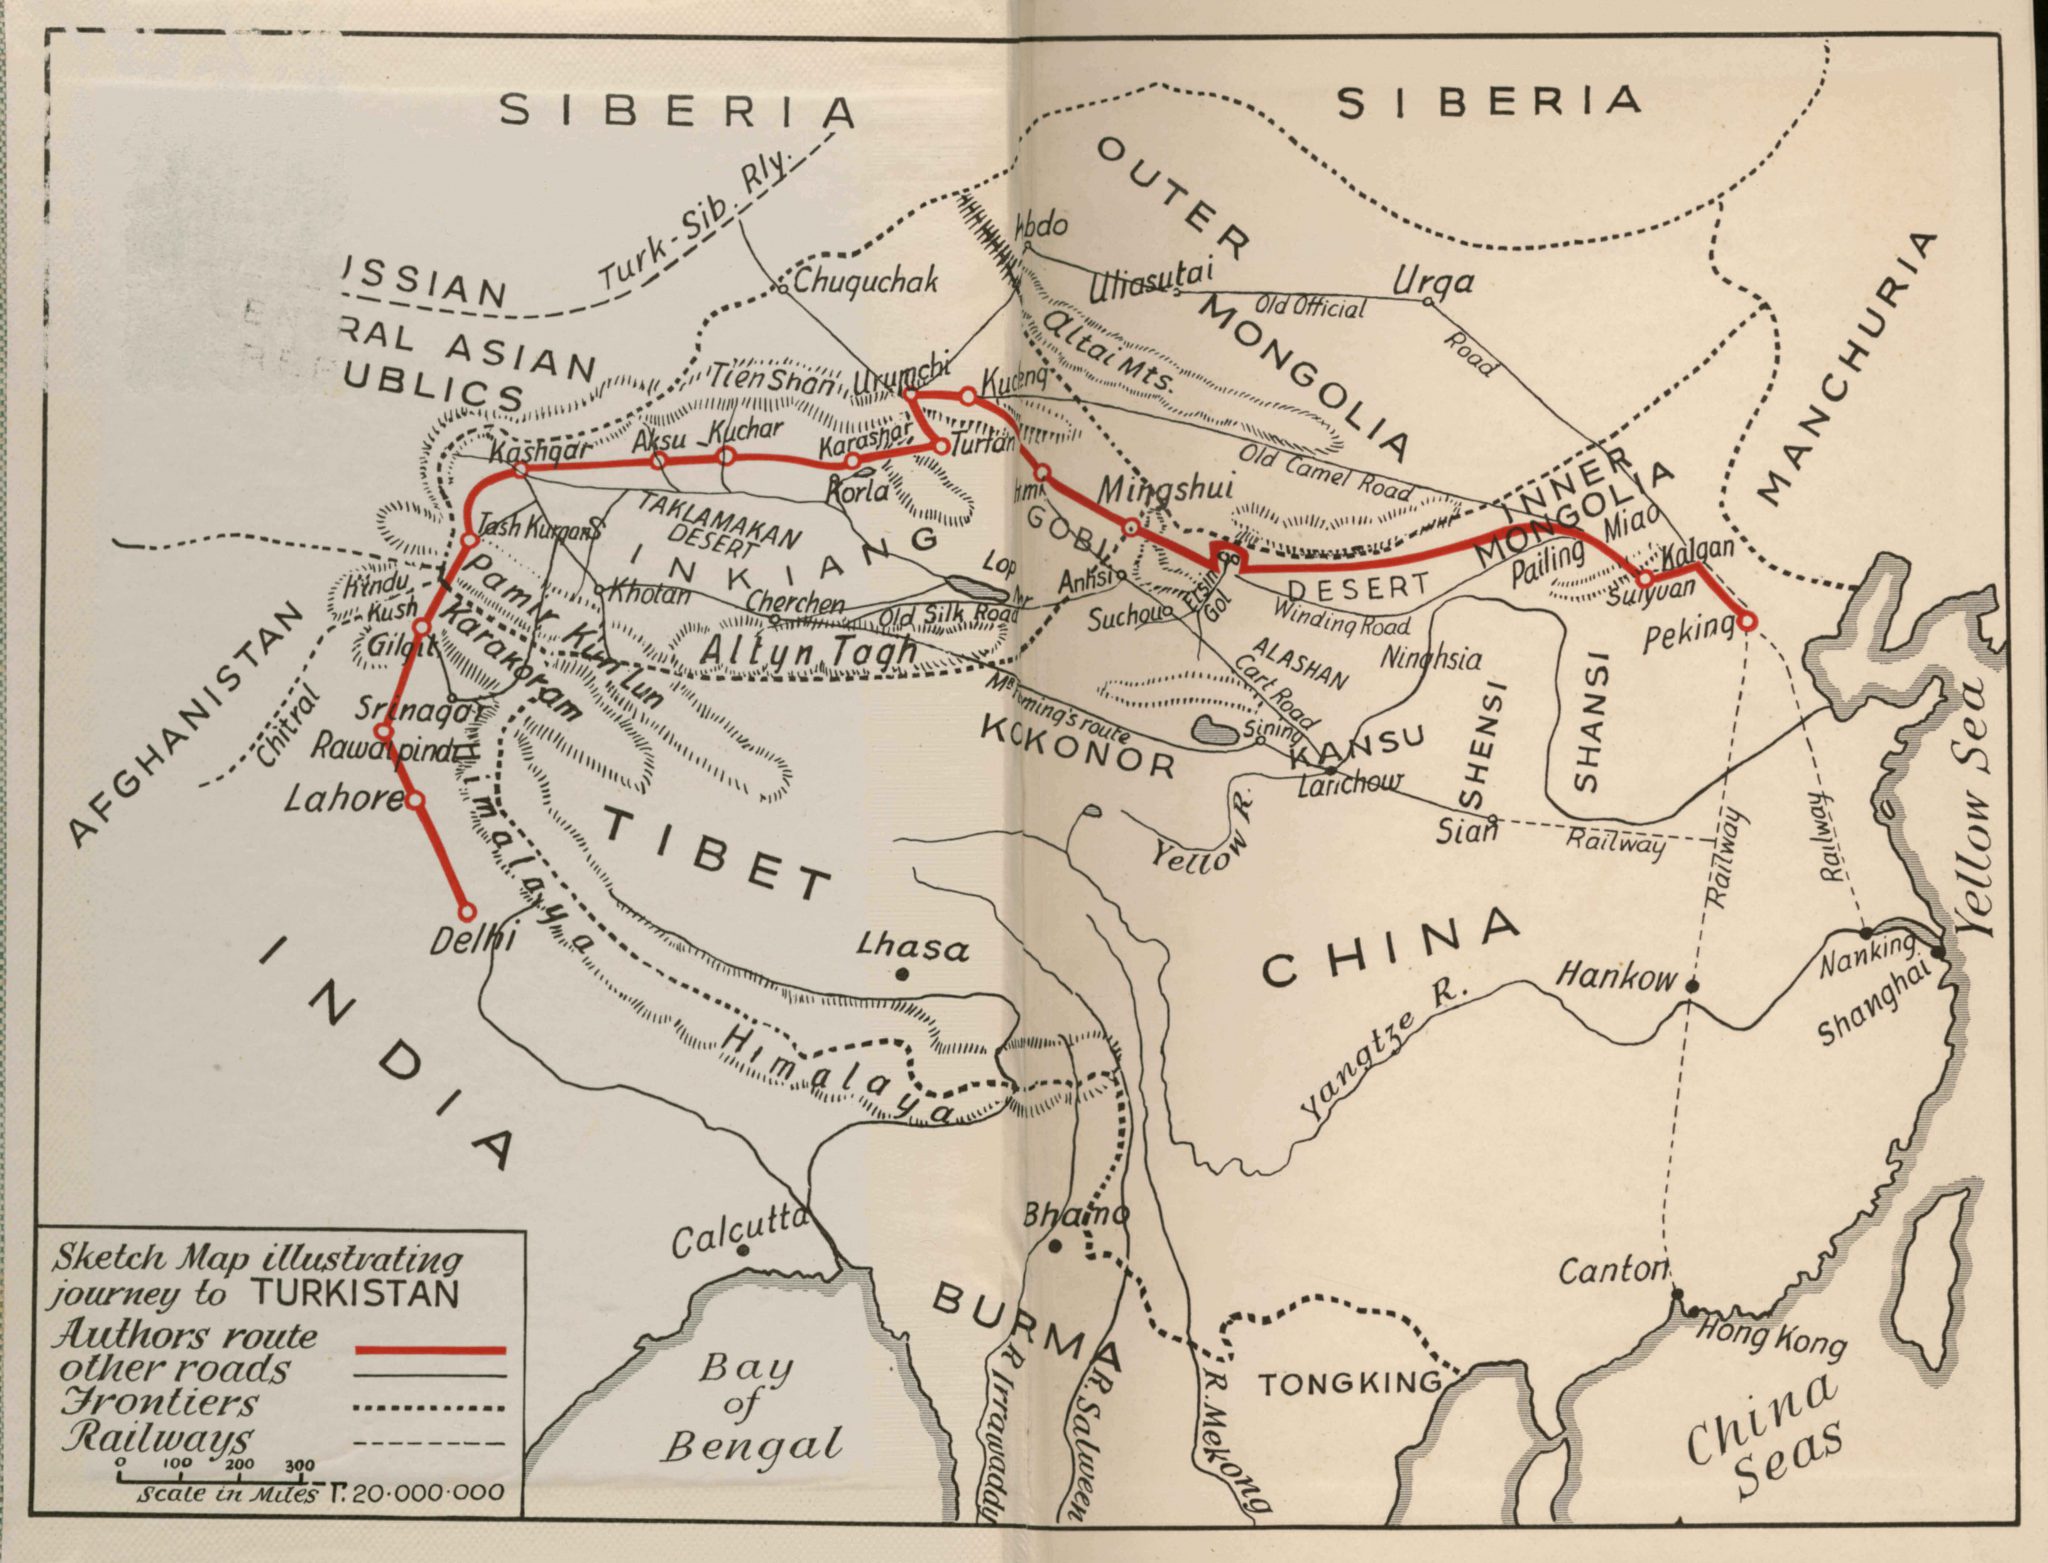 Sketch map illustrating journey to Turkistan 1937